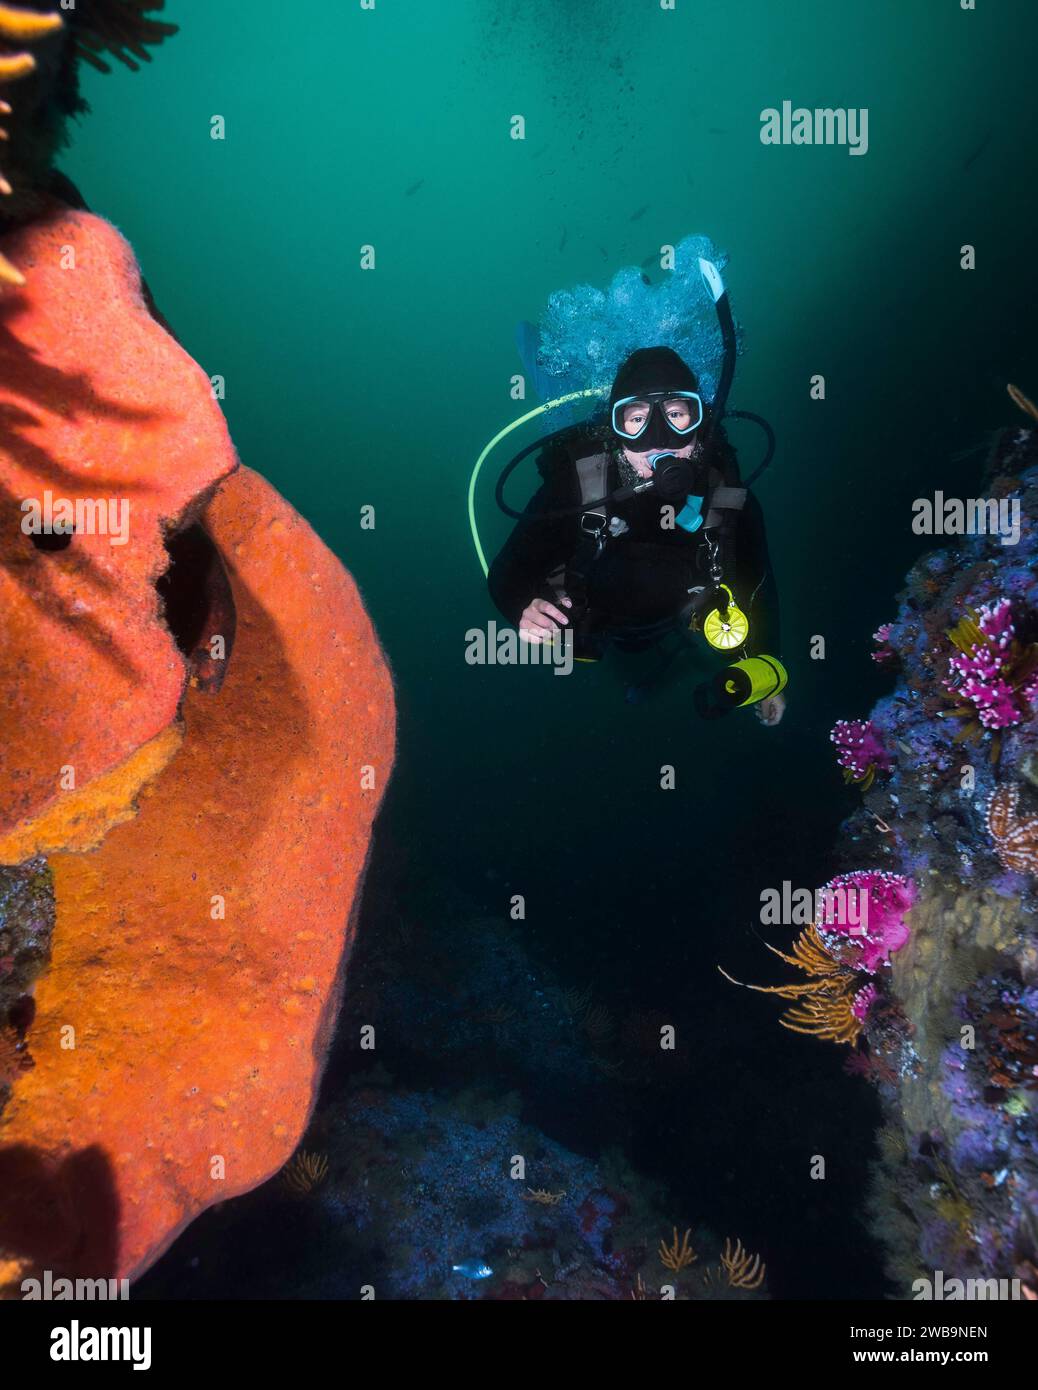 A female diver underwater swimming through the reef next to a large orange wall sponge (Spirastrella spinispirulifera) Stock Photo